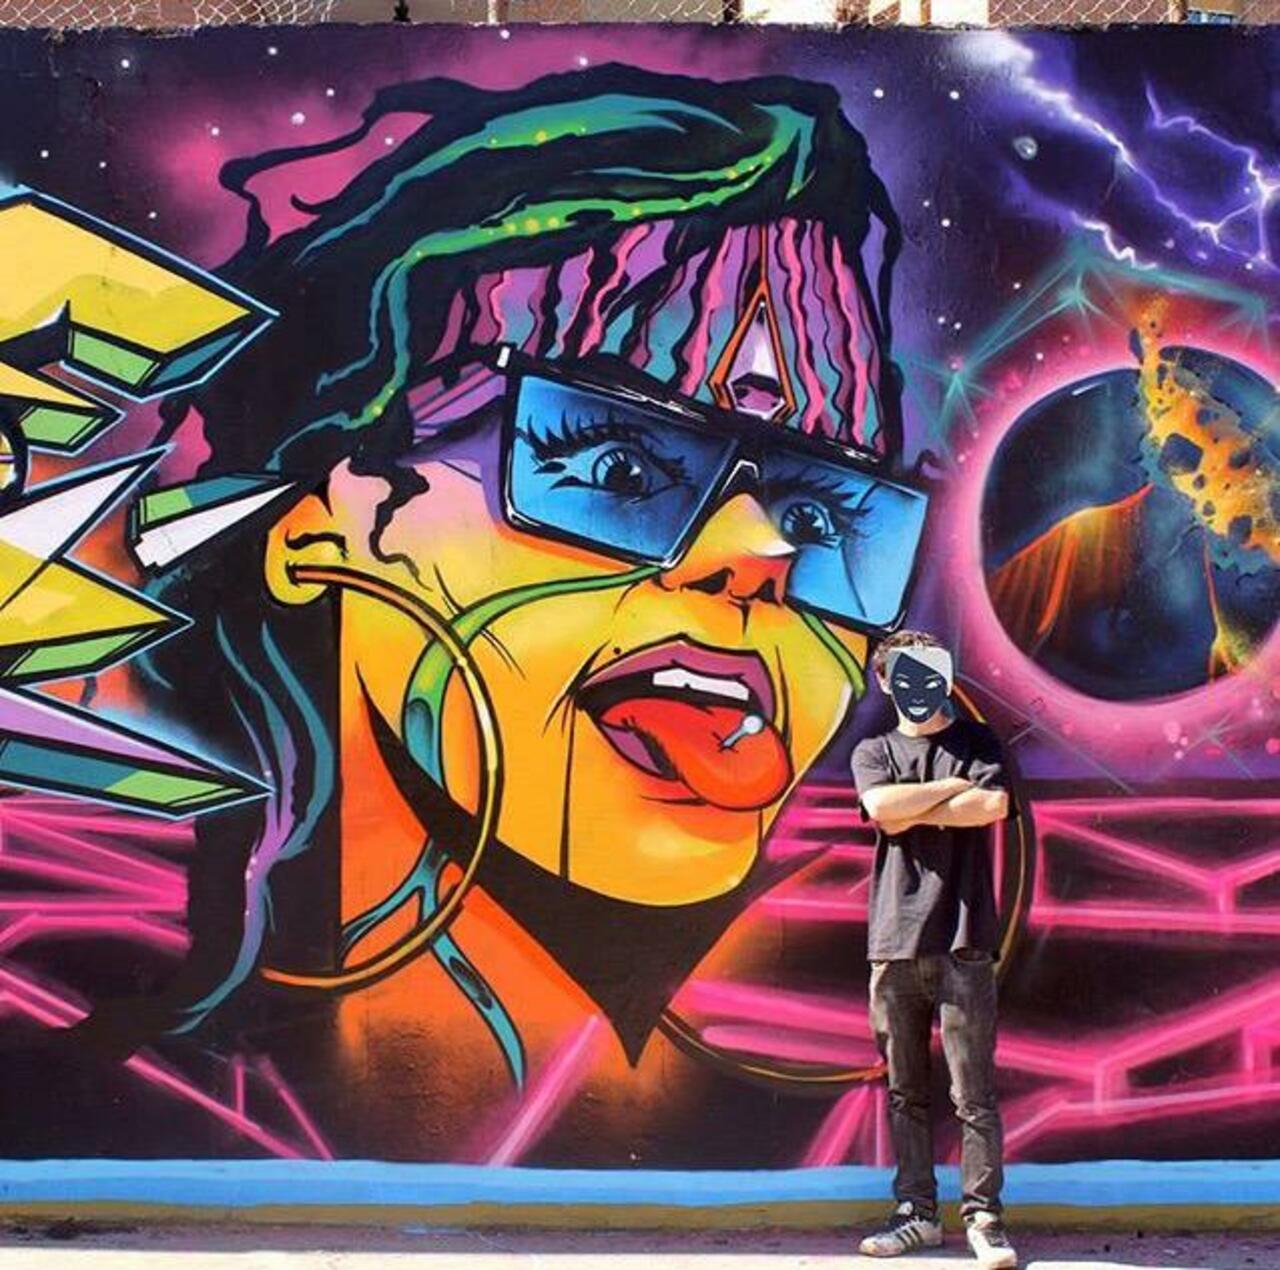 Brilliant new Street Art by the artist Jaycaes

#art #graffiti #mural #streetart http://t.co/PBddAE6WH6 googlestreetart chinatoniq